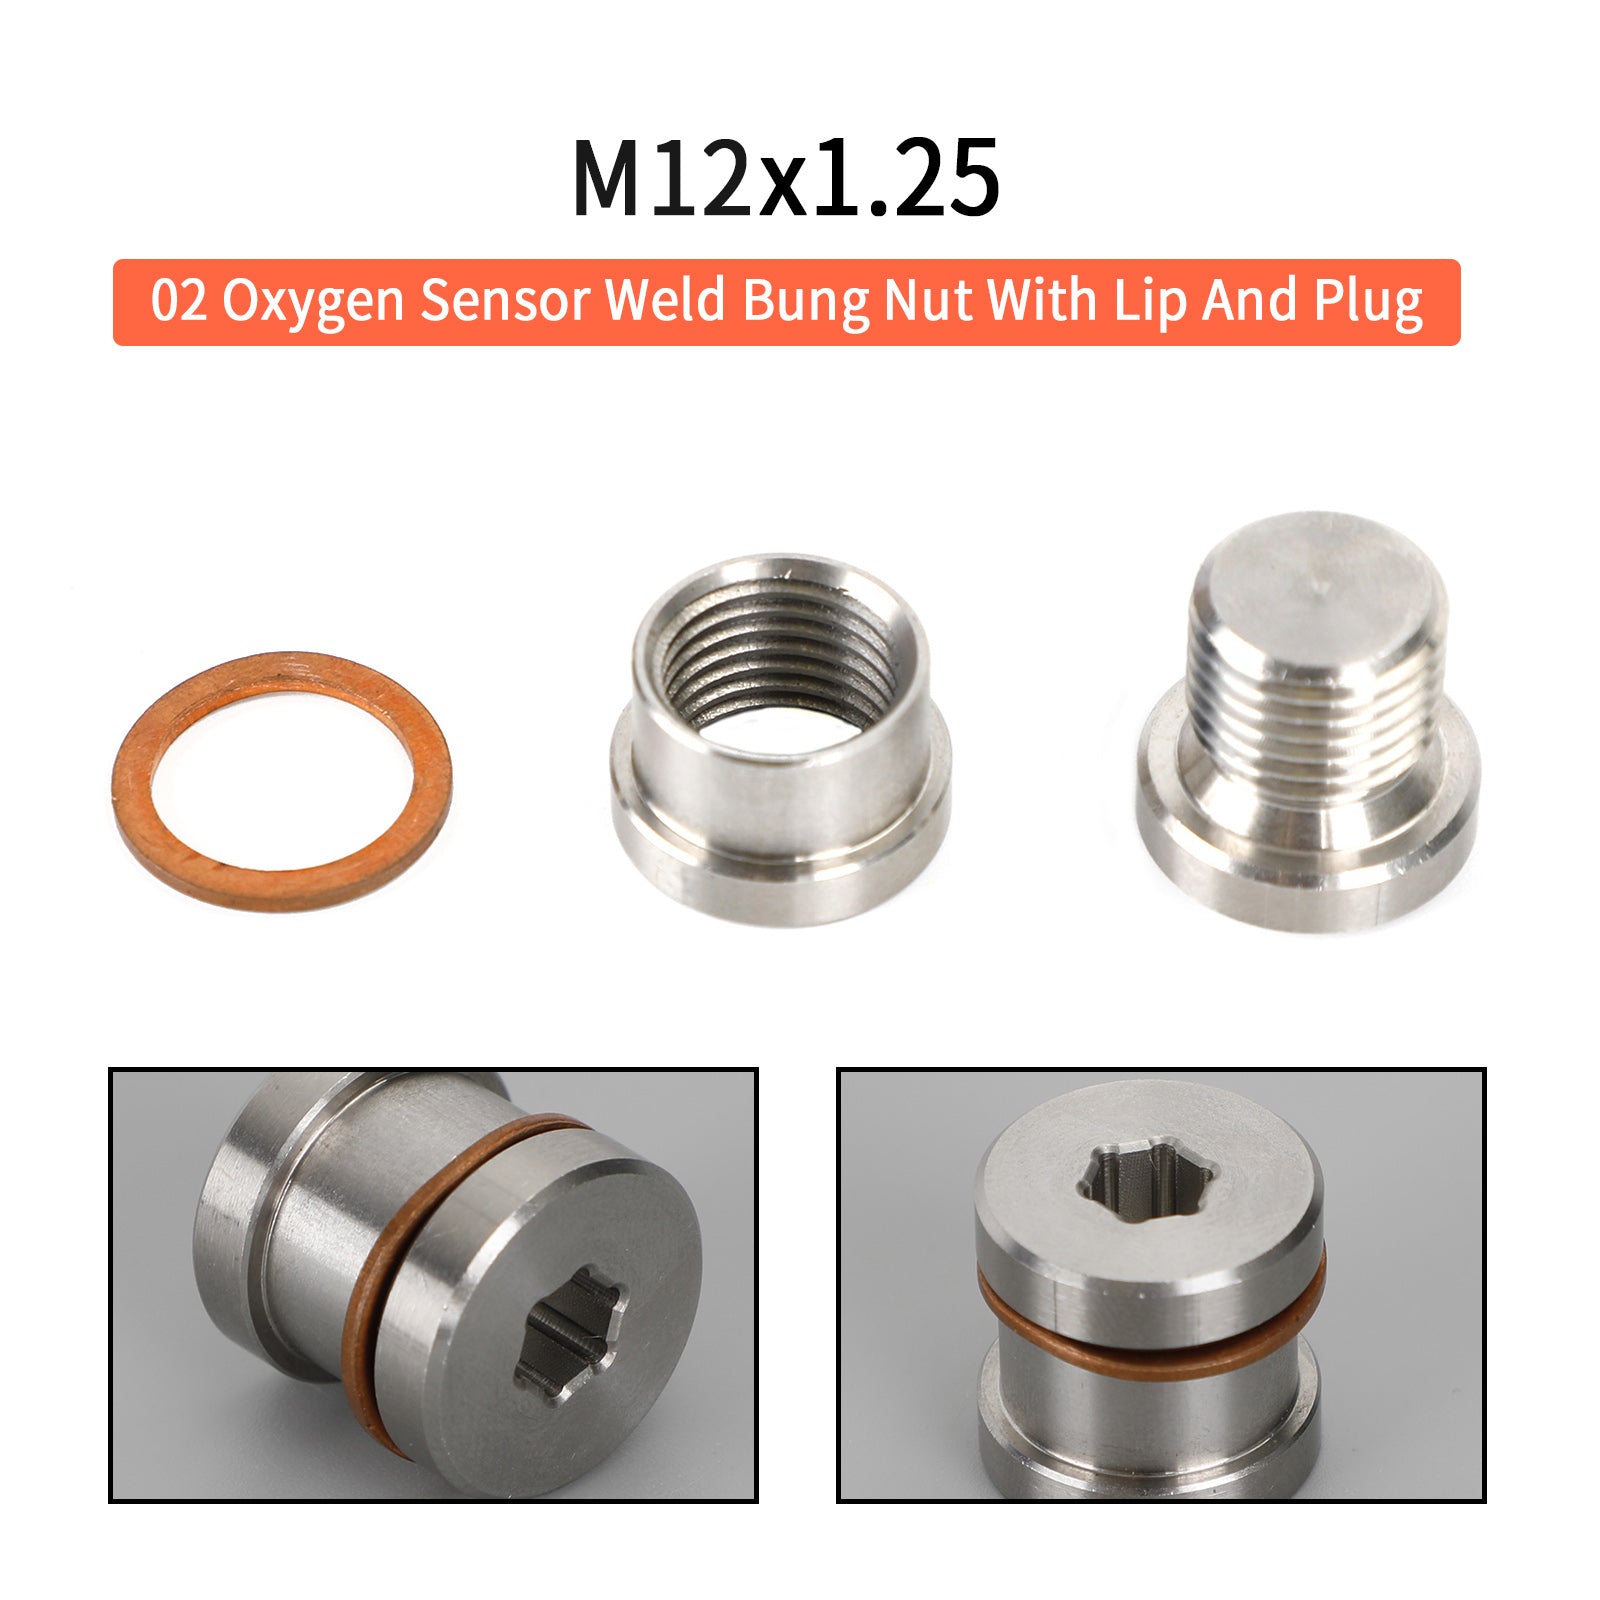 M12 x 1.25 Oxygen Sensor Adapter Spacer Hex Plug Nut Kit Stainless ste